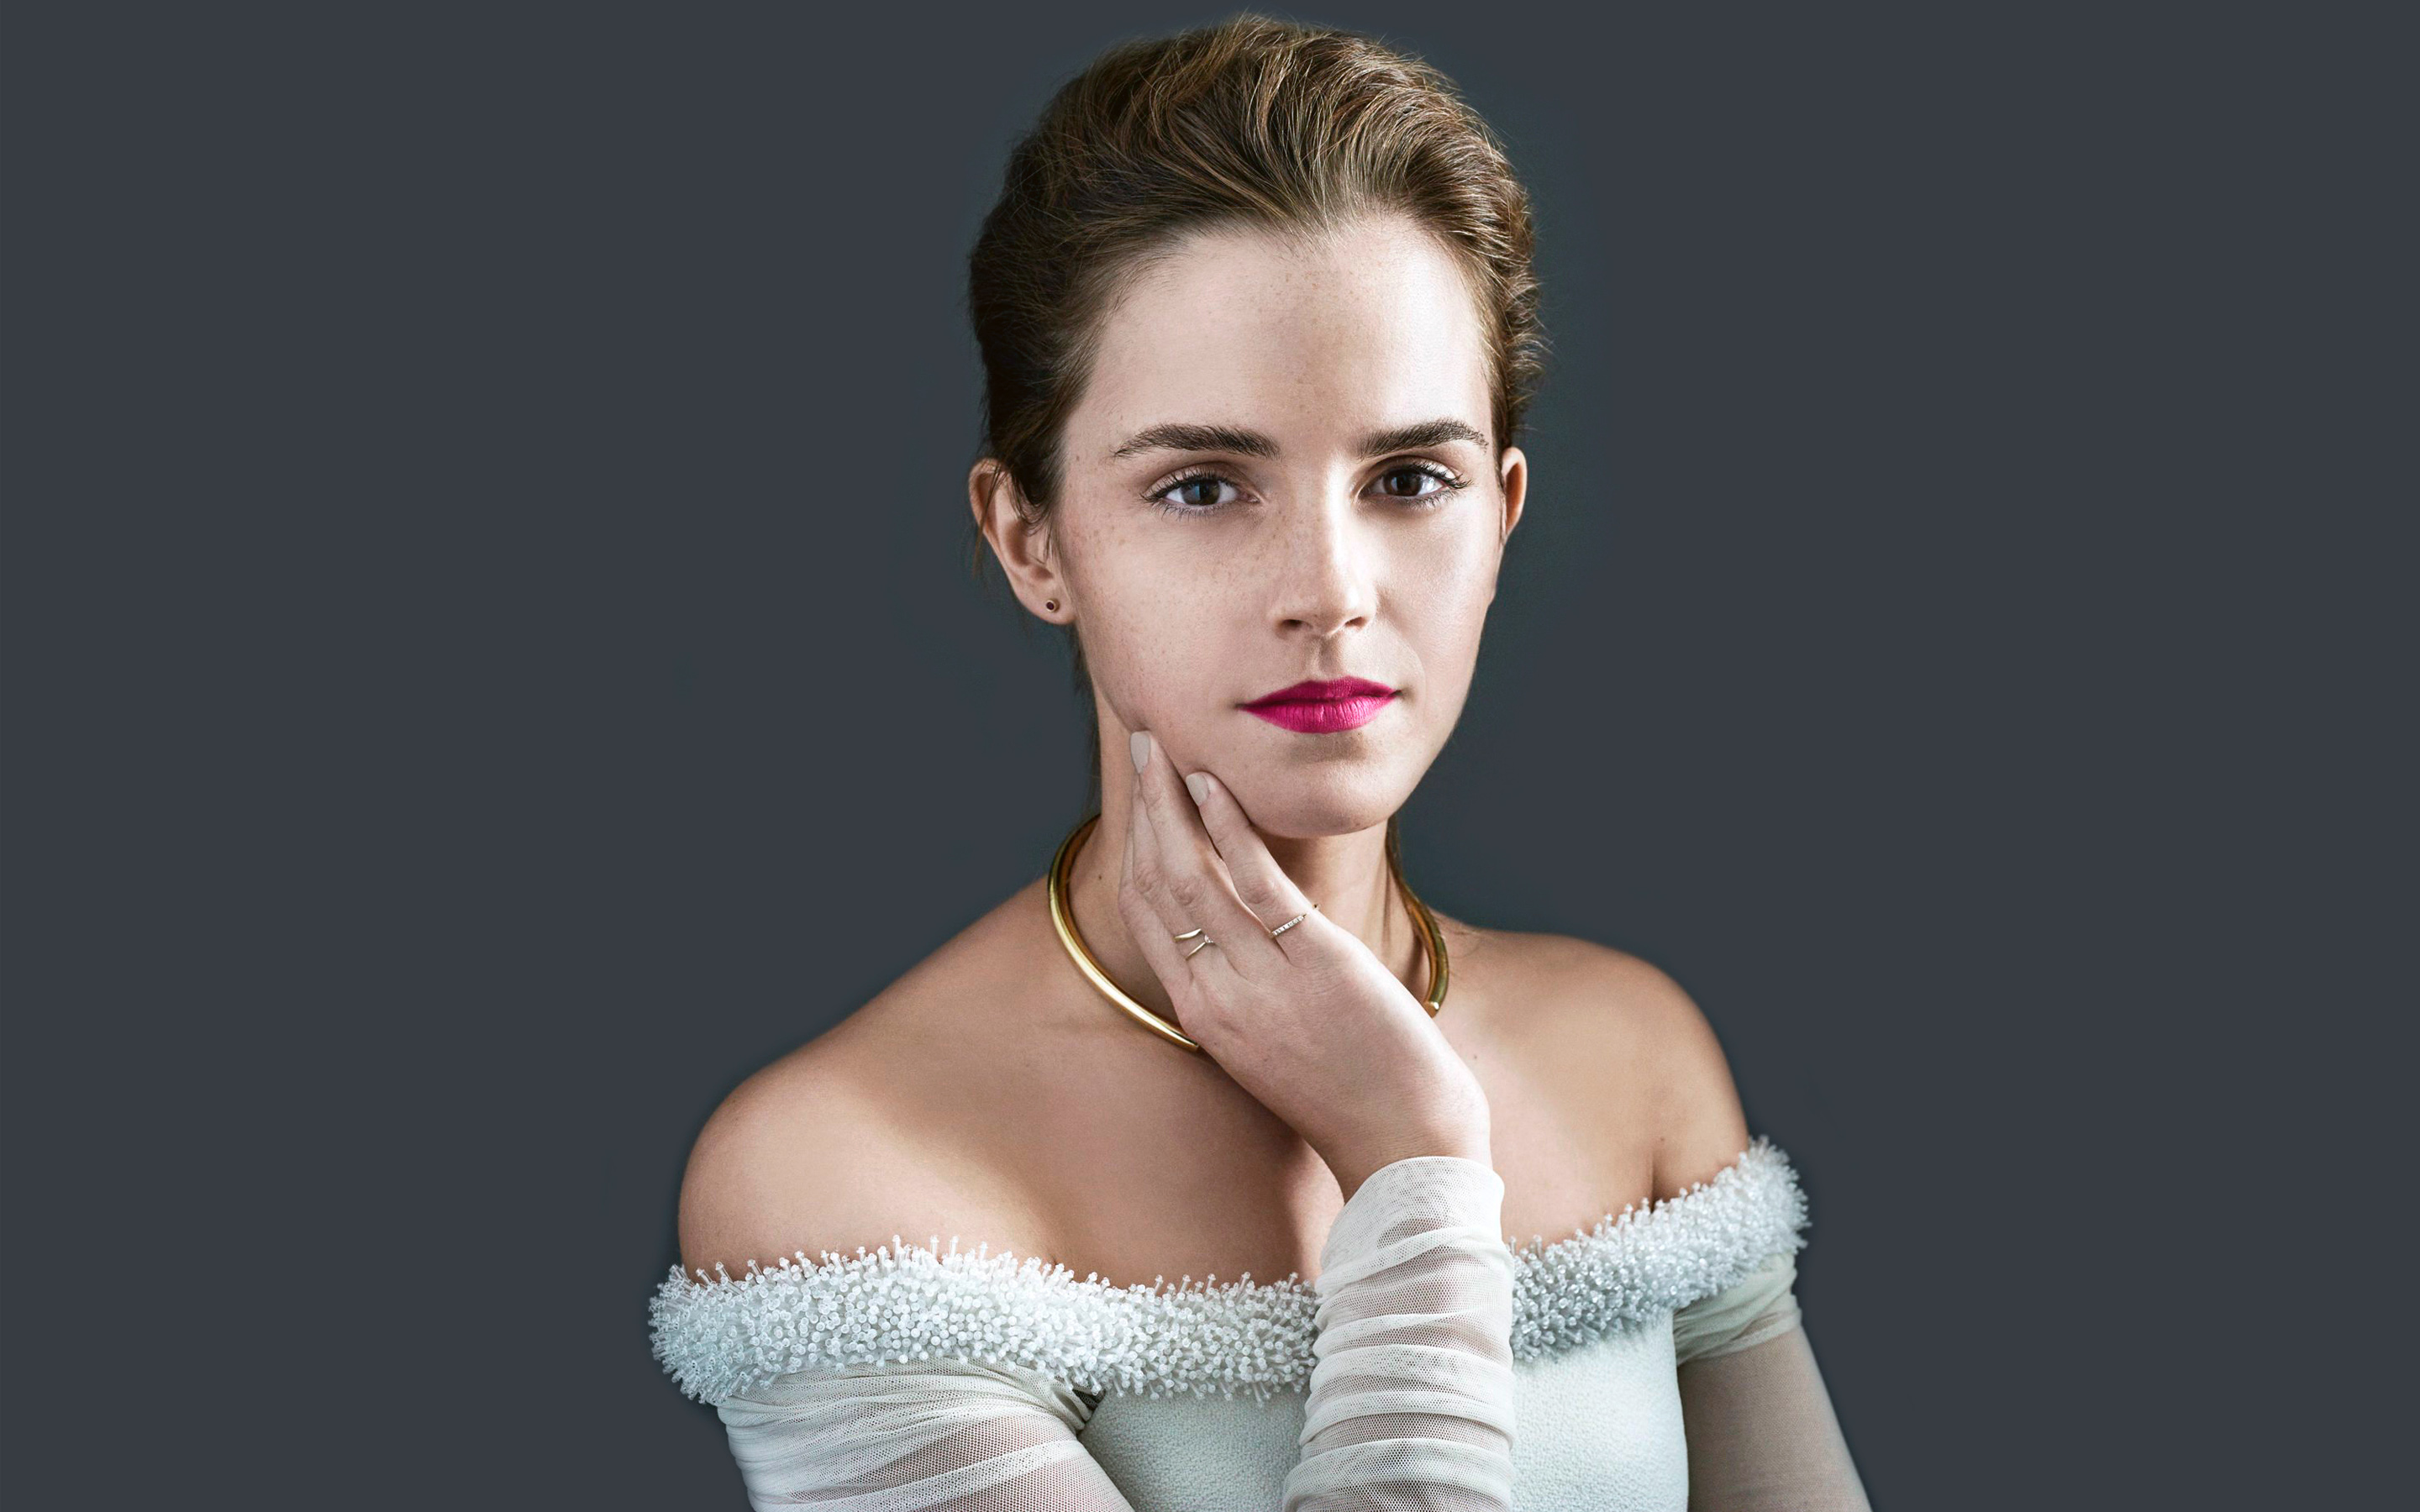 04 ~ Emma Watson (+4 Votes)